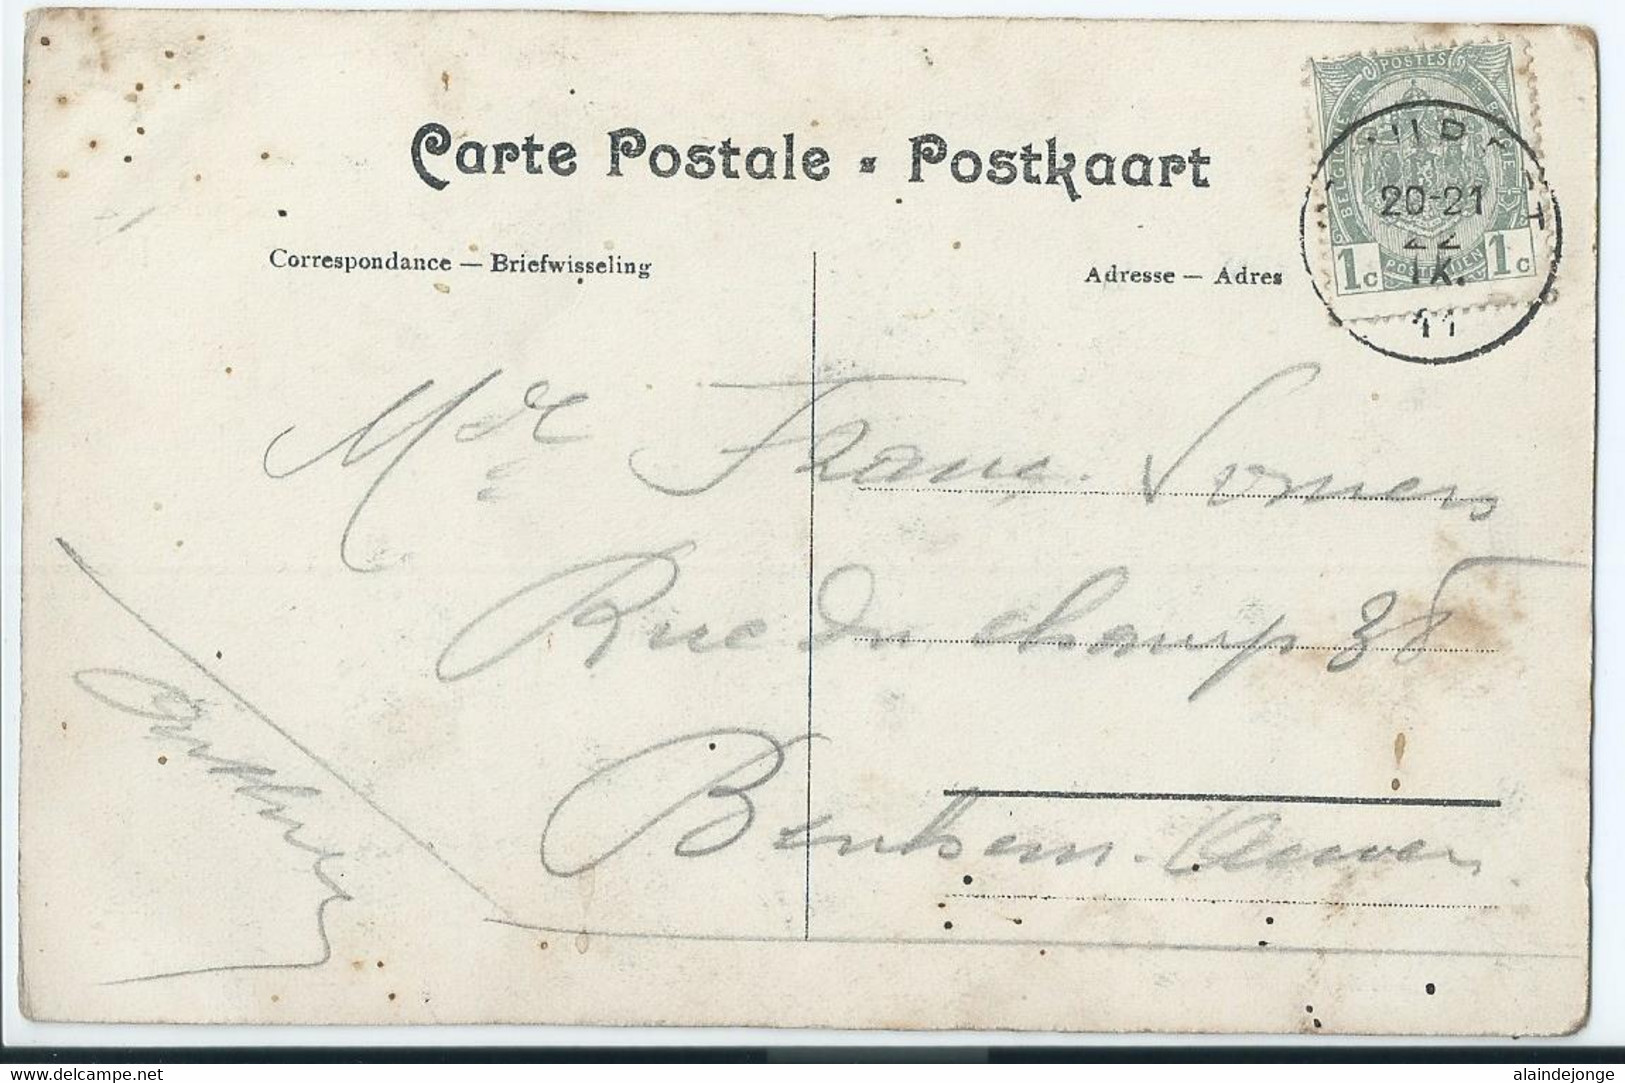 Saint-Hubert - Le Pénitencier, Cour D'honneur - Edit. Adelin Bay, St-Hubert - 1911 - Saint-Hubert